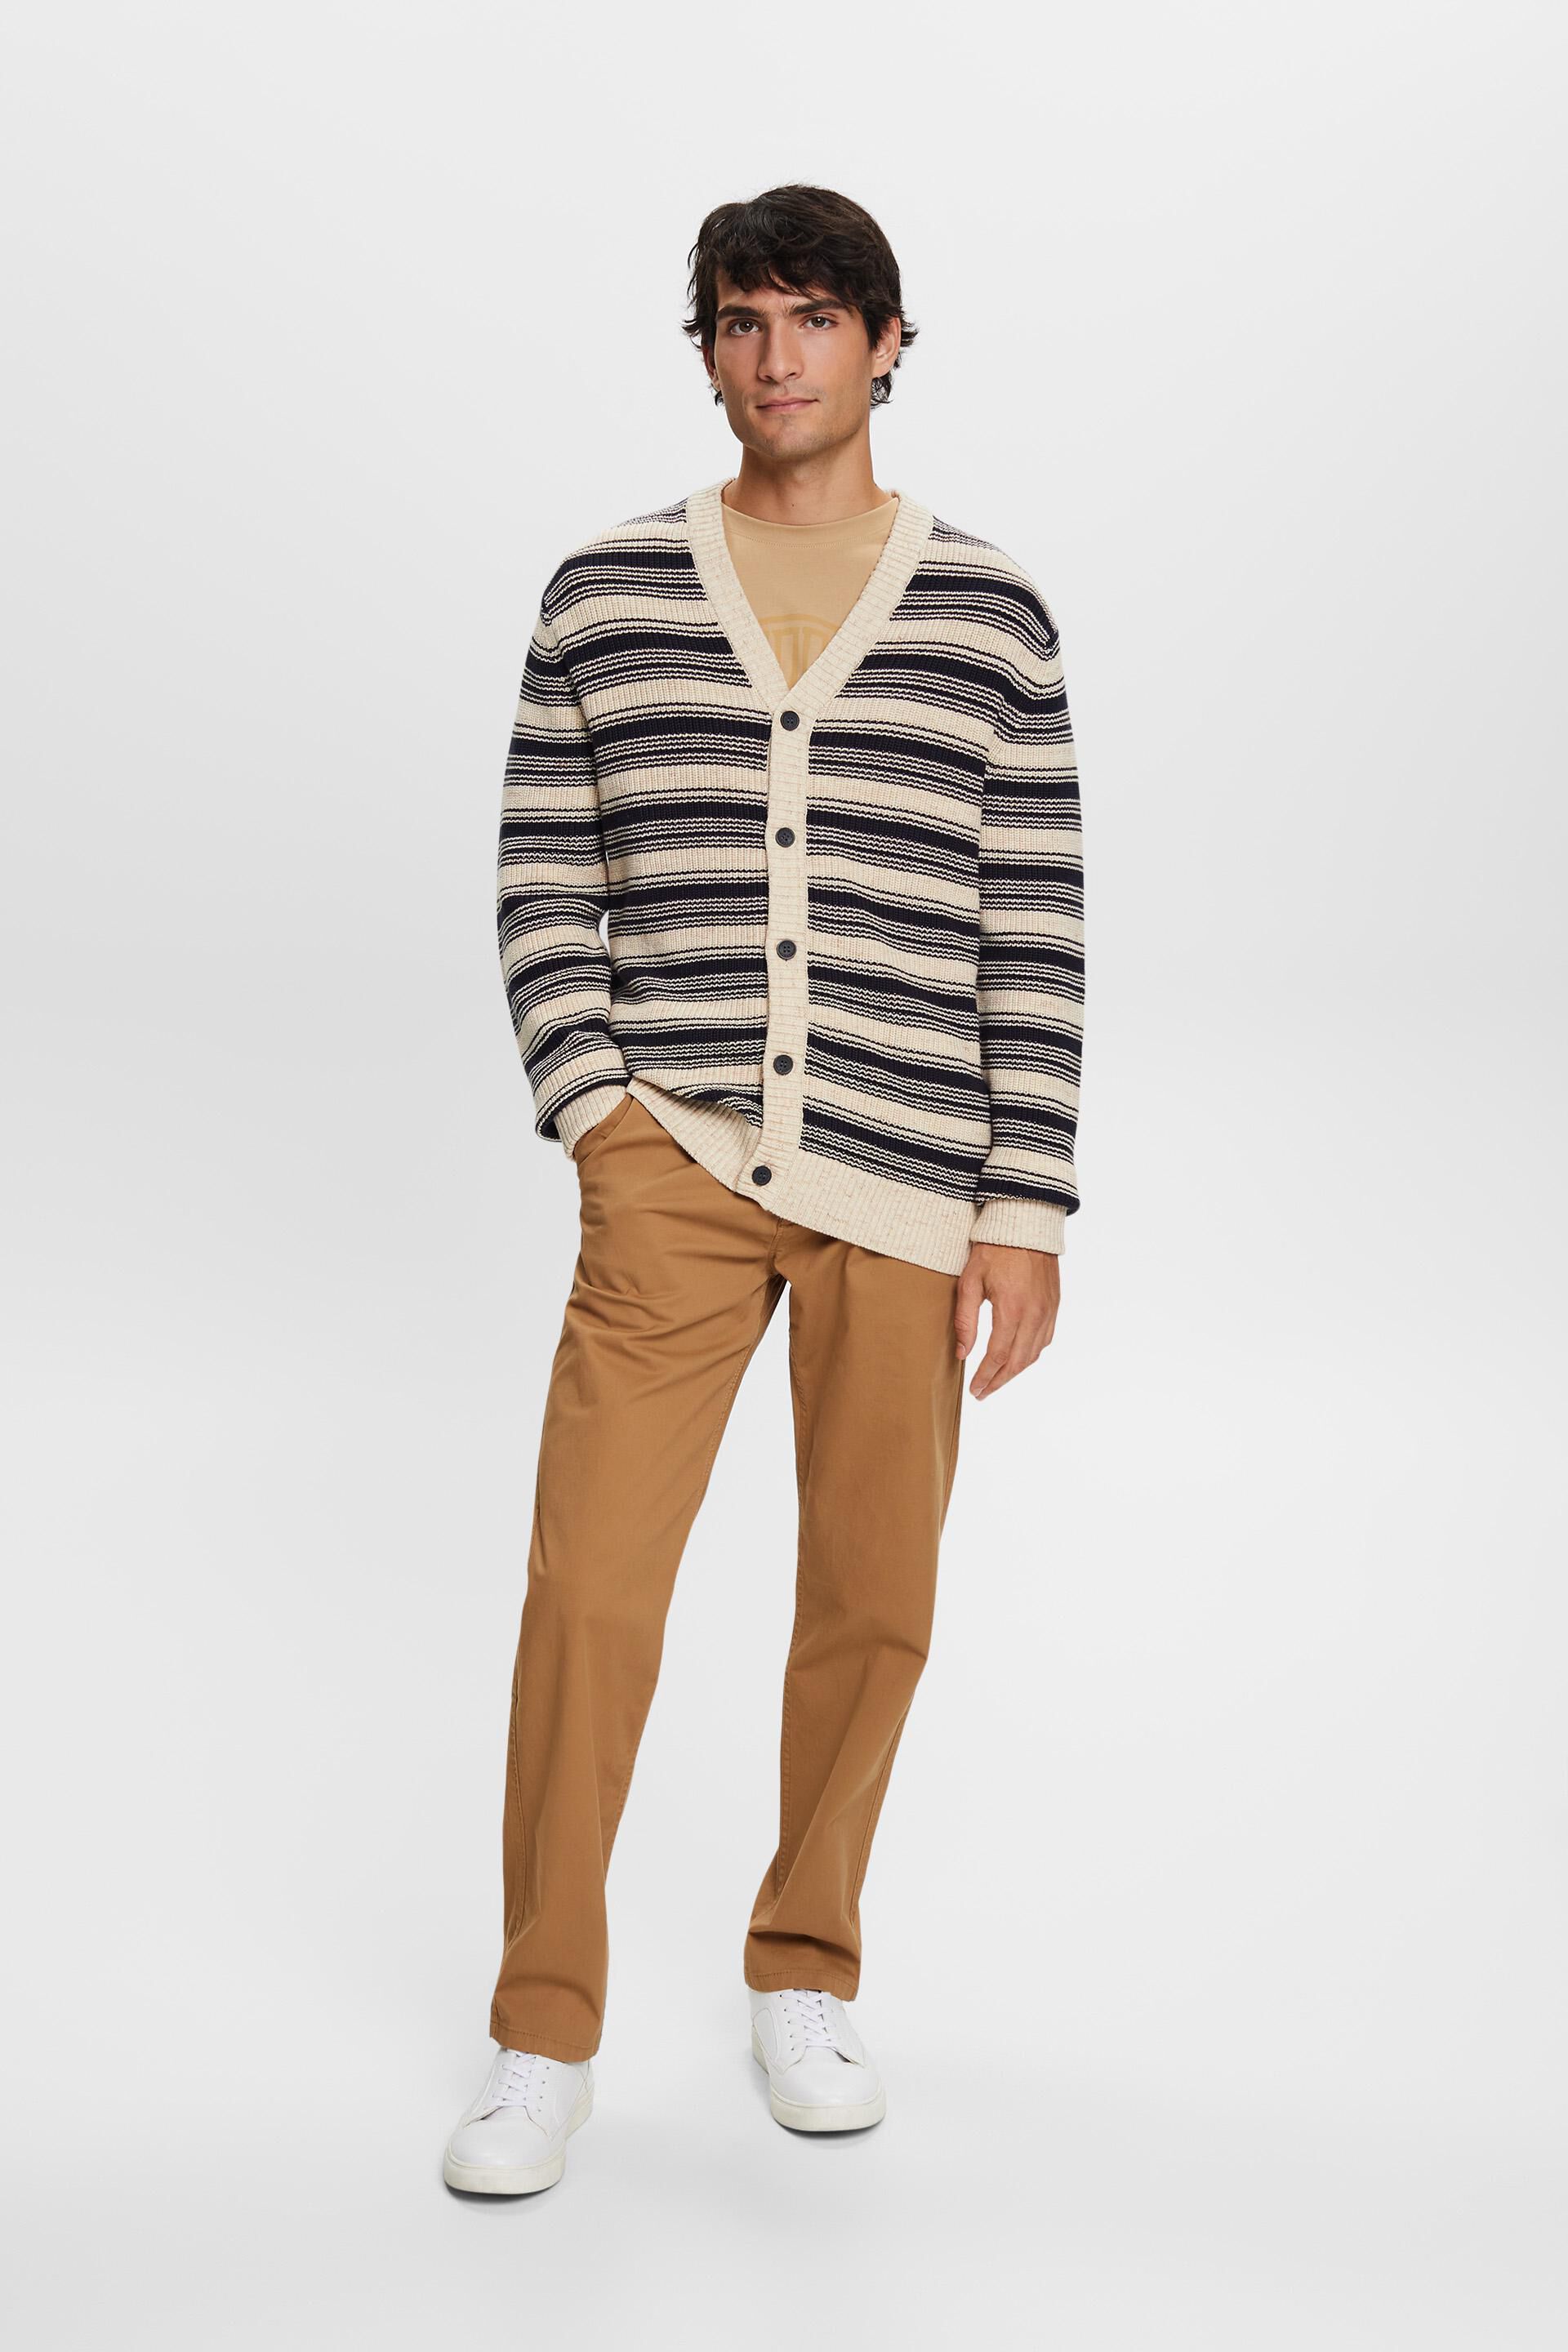 Esprit 100% cotton V-neck Striped cardigan,